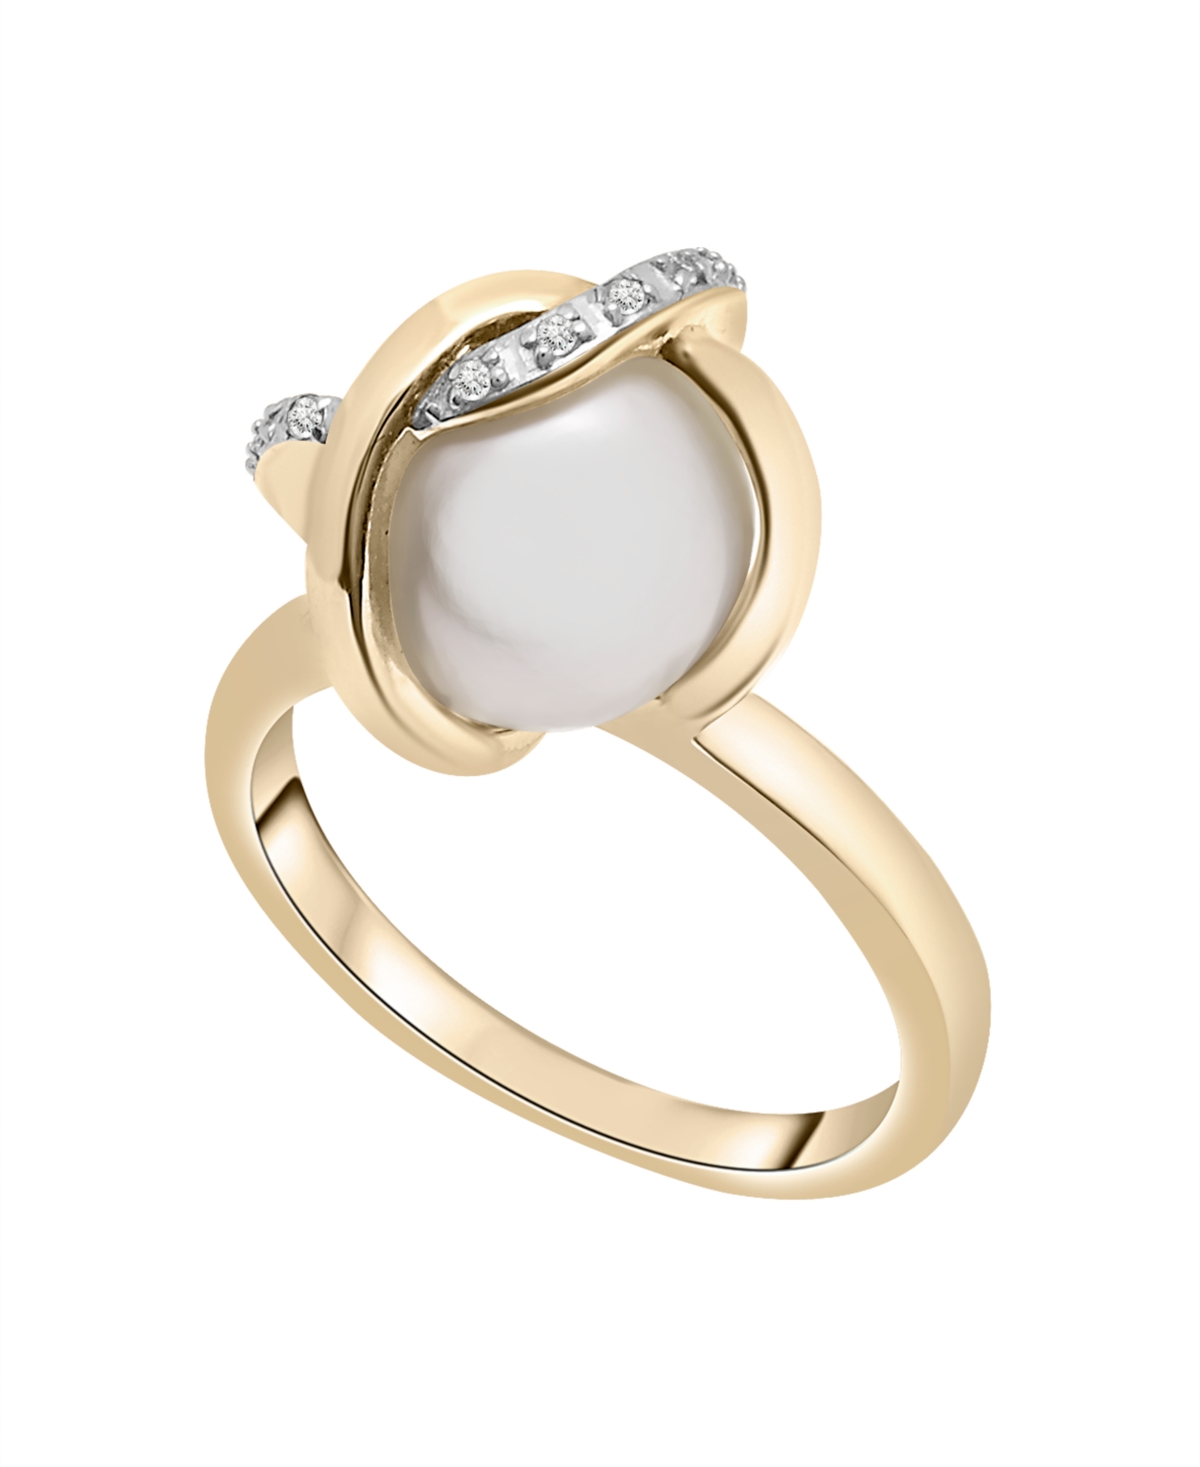 $600 Macys Diamond Accent Onyx Black 10-1/2CT Engagement Wedding Ring 14K Gold 7 